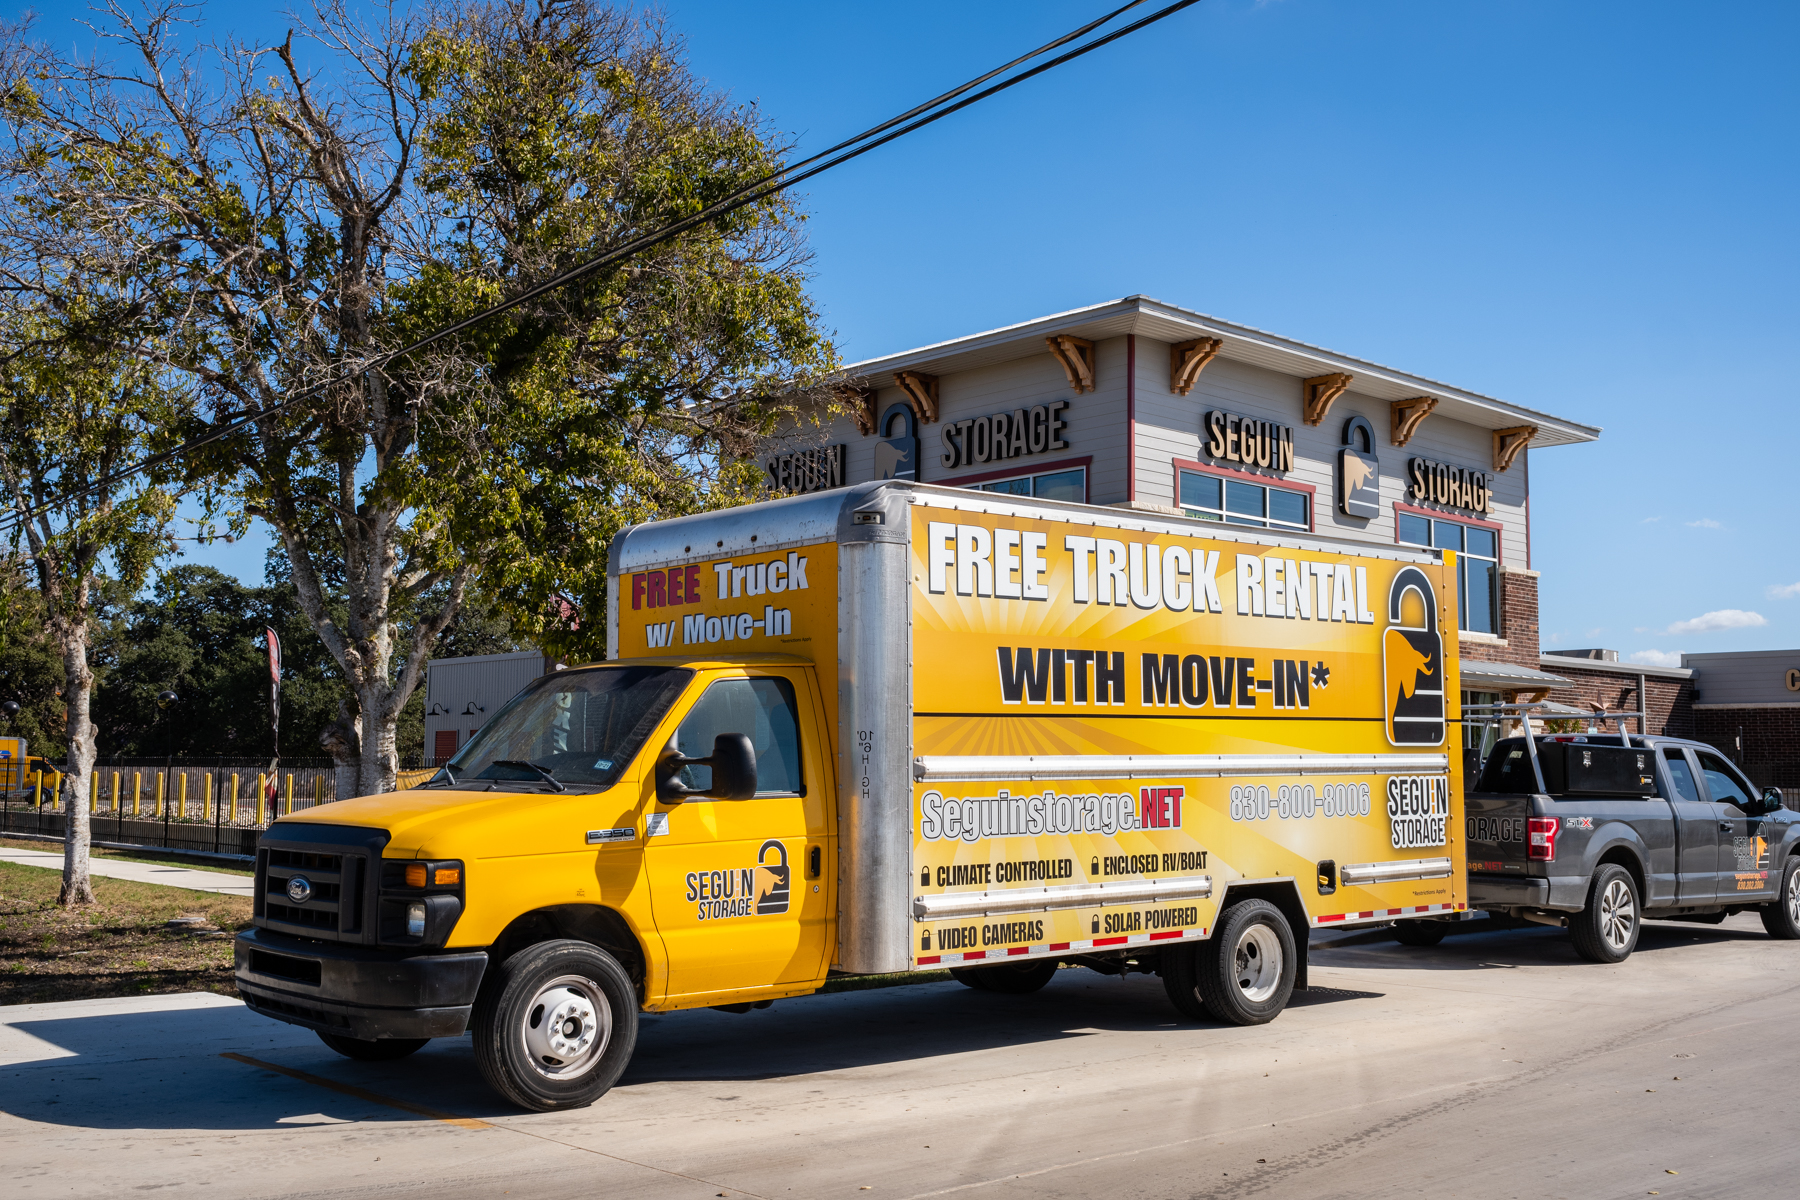 Free Truck Rental